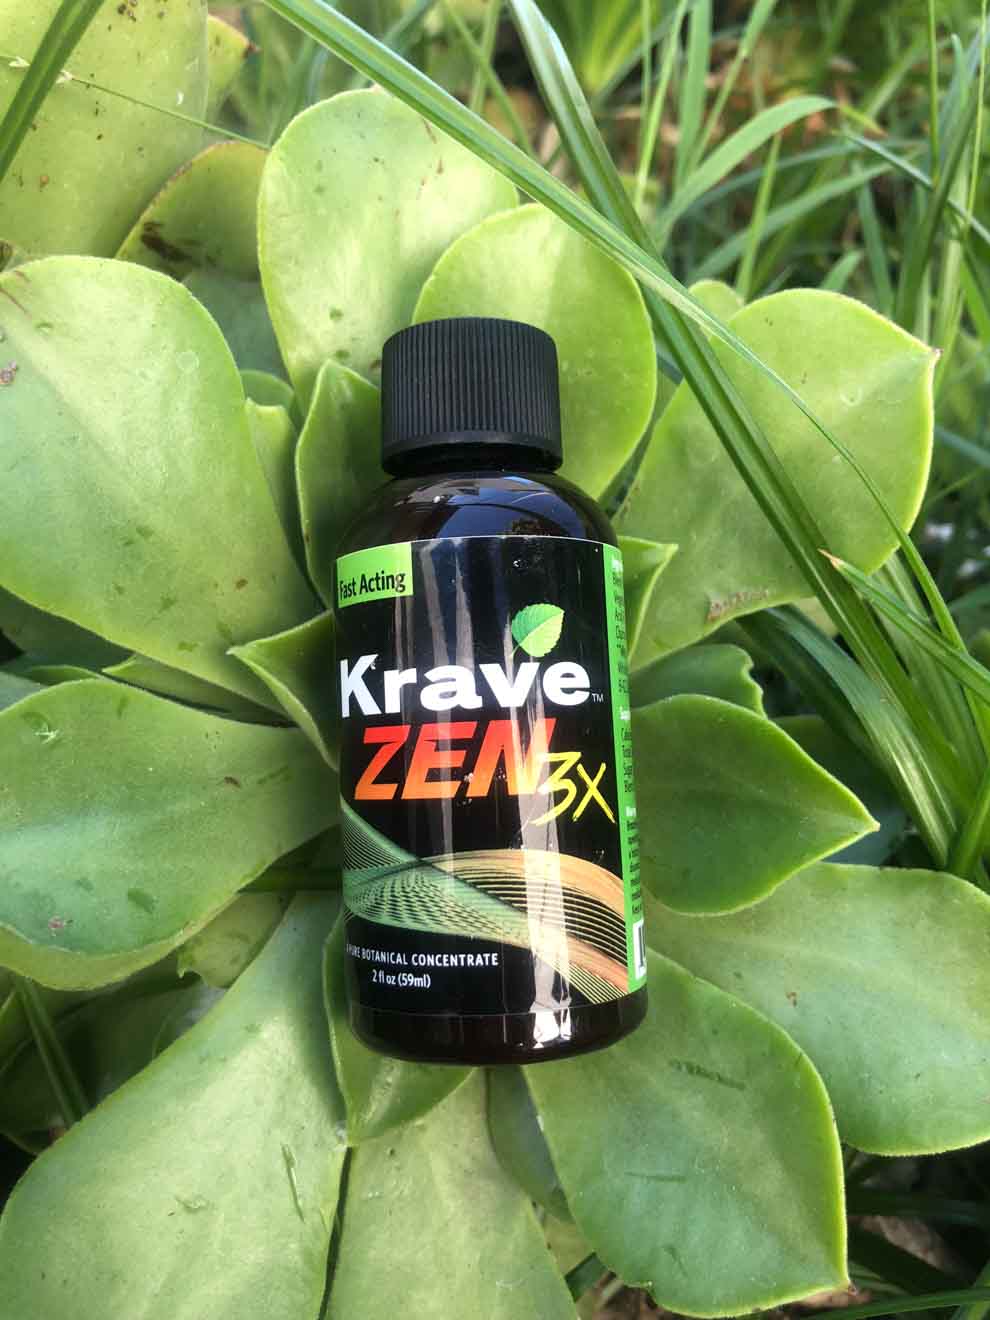 Krave - Zen 3x Extract Liquid 2 fl oz (59ml)